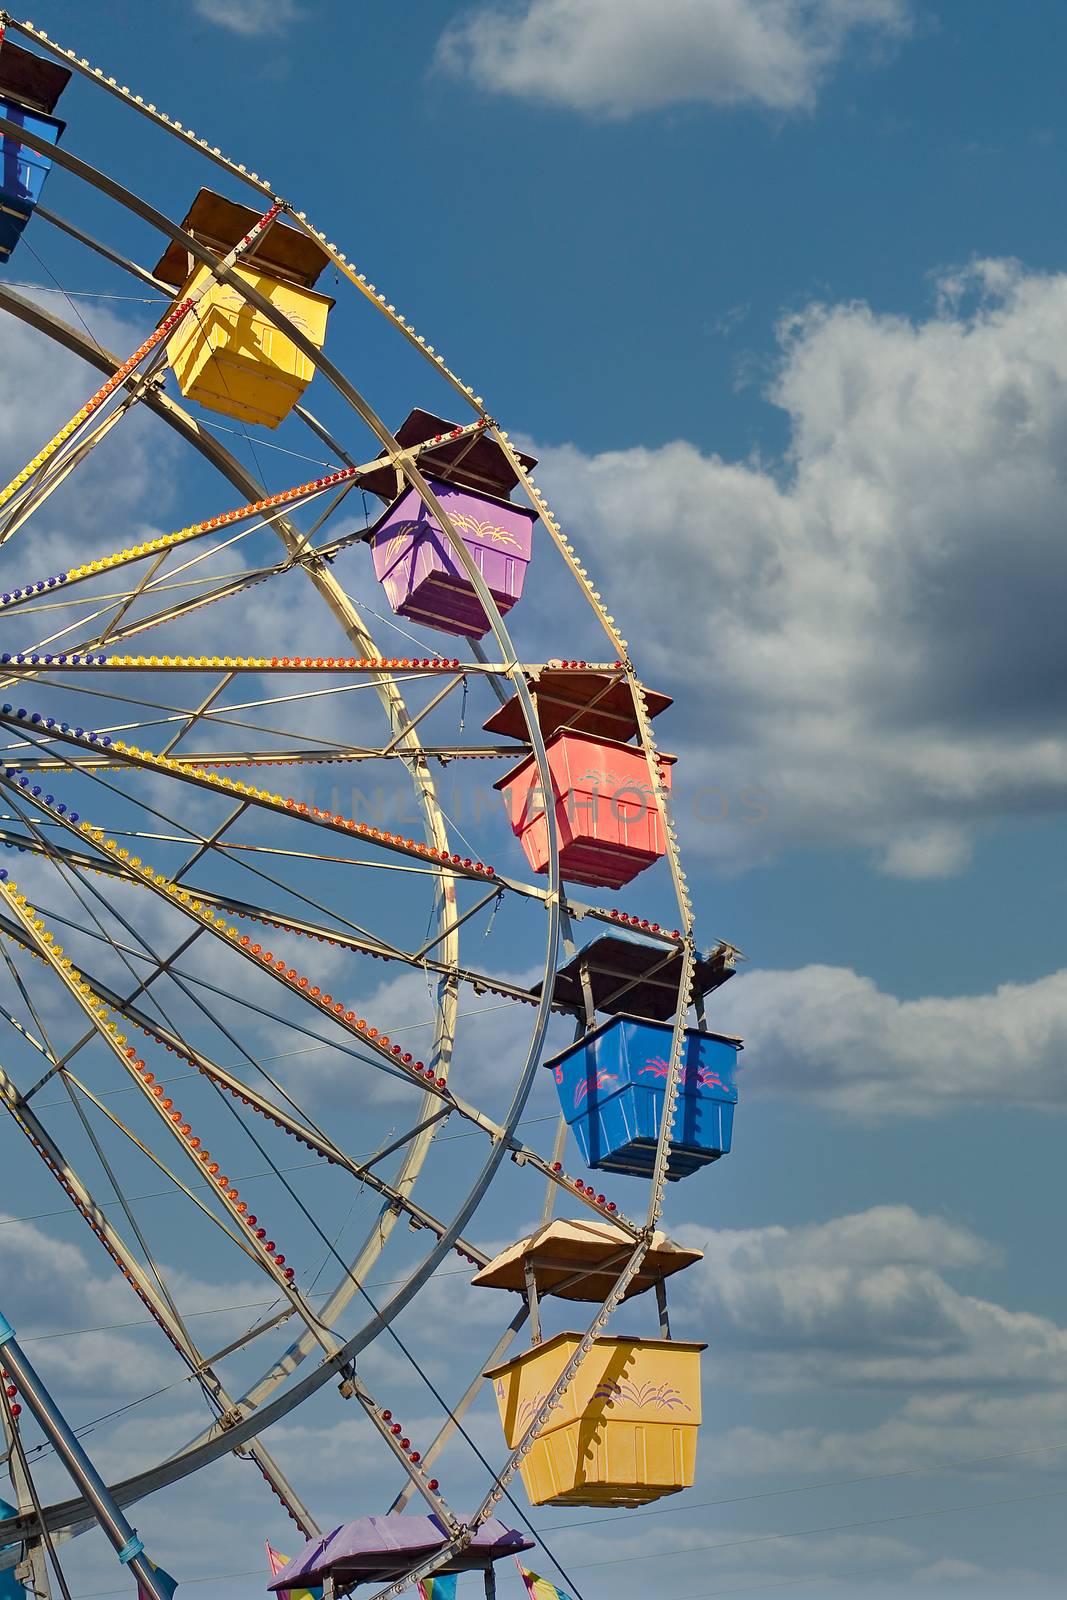 Colorful Ferris Wheel on Sky by dbvirago